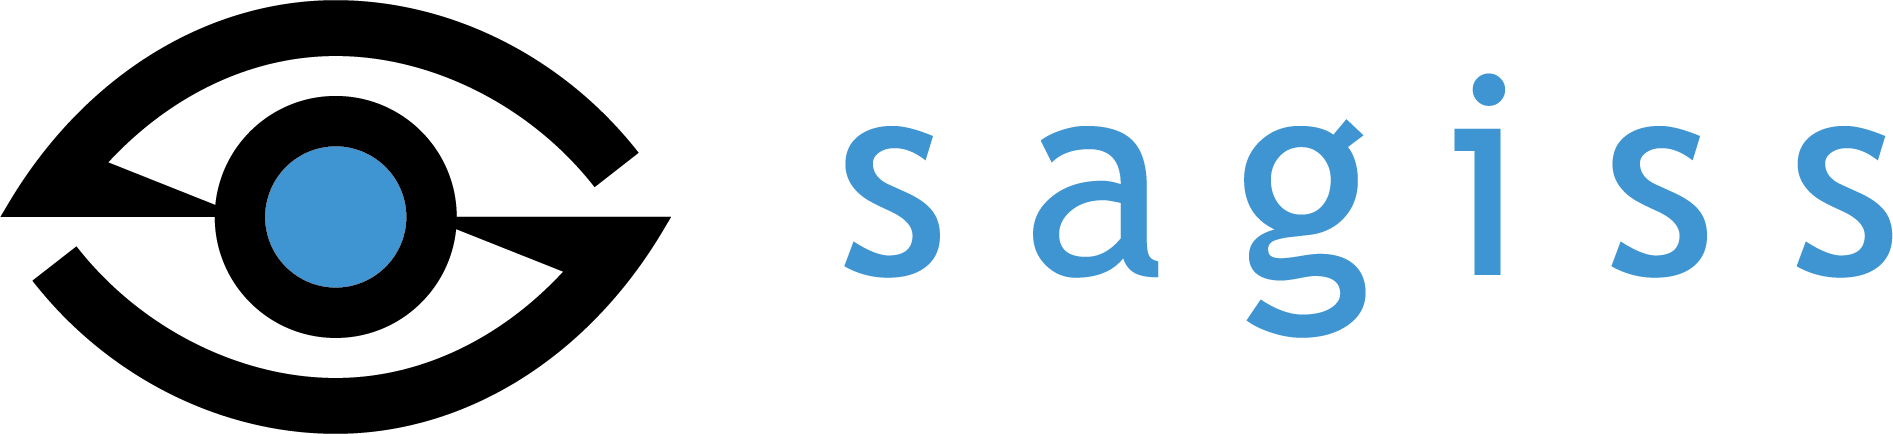 Sagiss Logo - Full